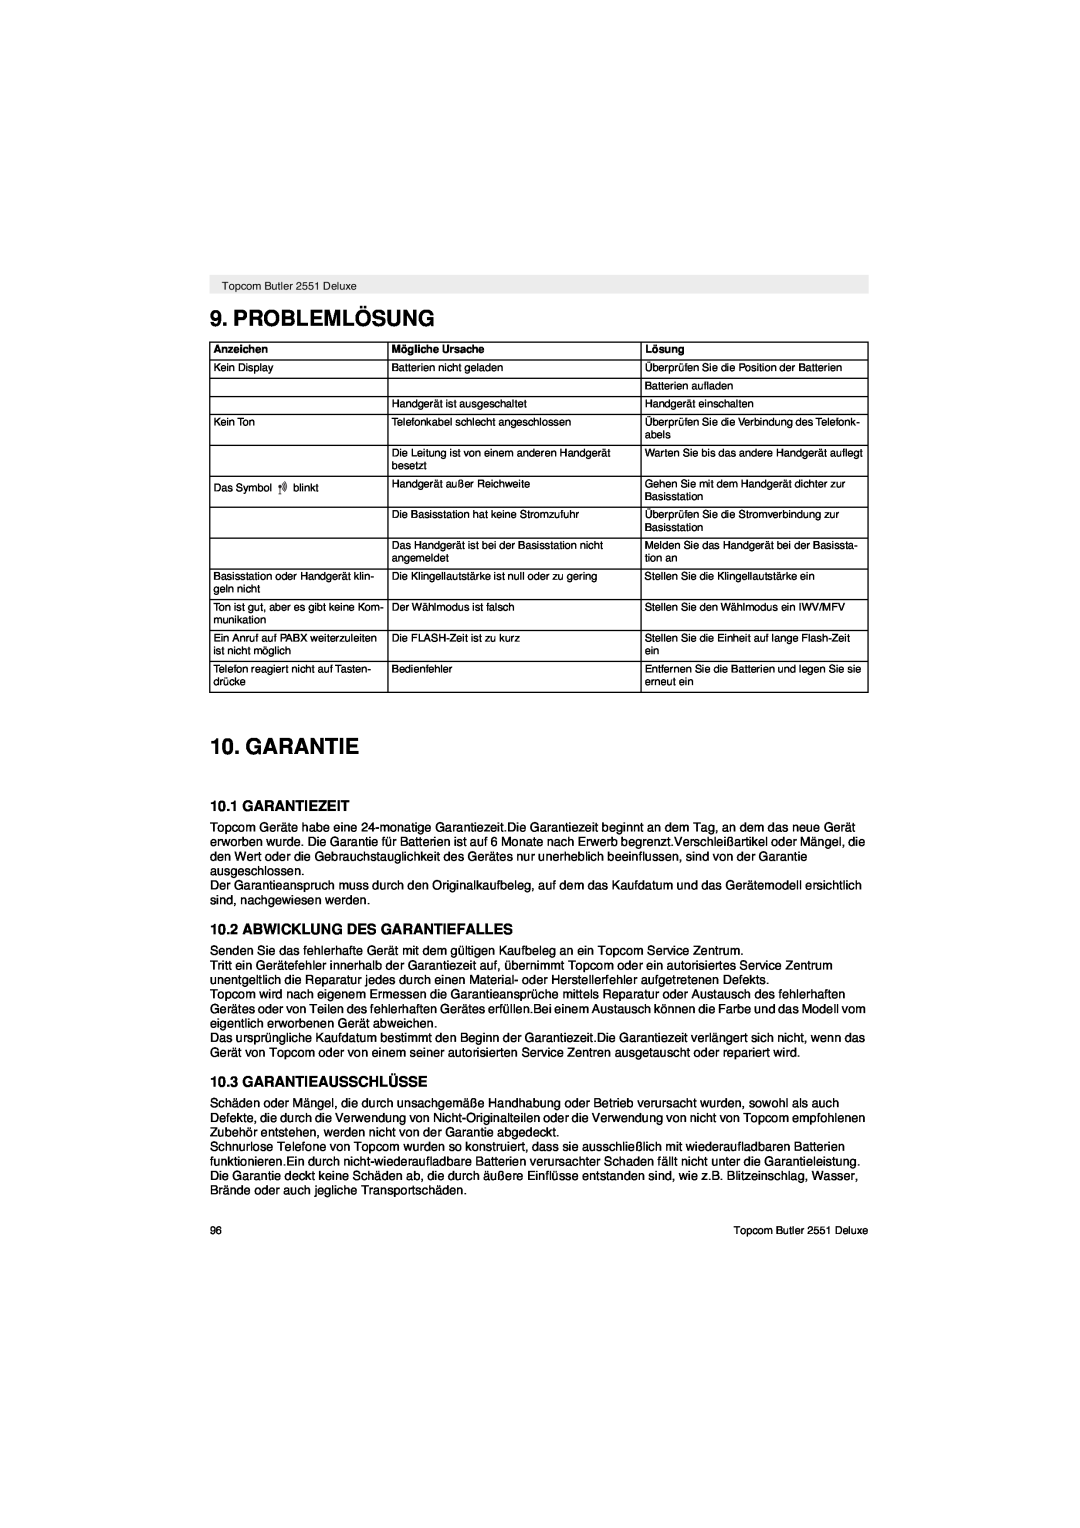 Topcom 2551 manual Problemlösung, Garantiezeit, Abwicklung Des Garantiefalles, Garantieausschlüsse 